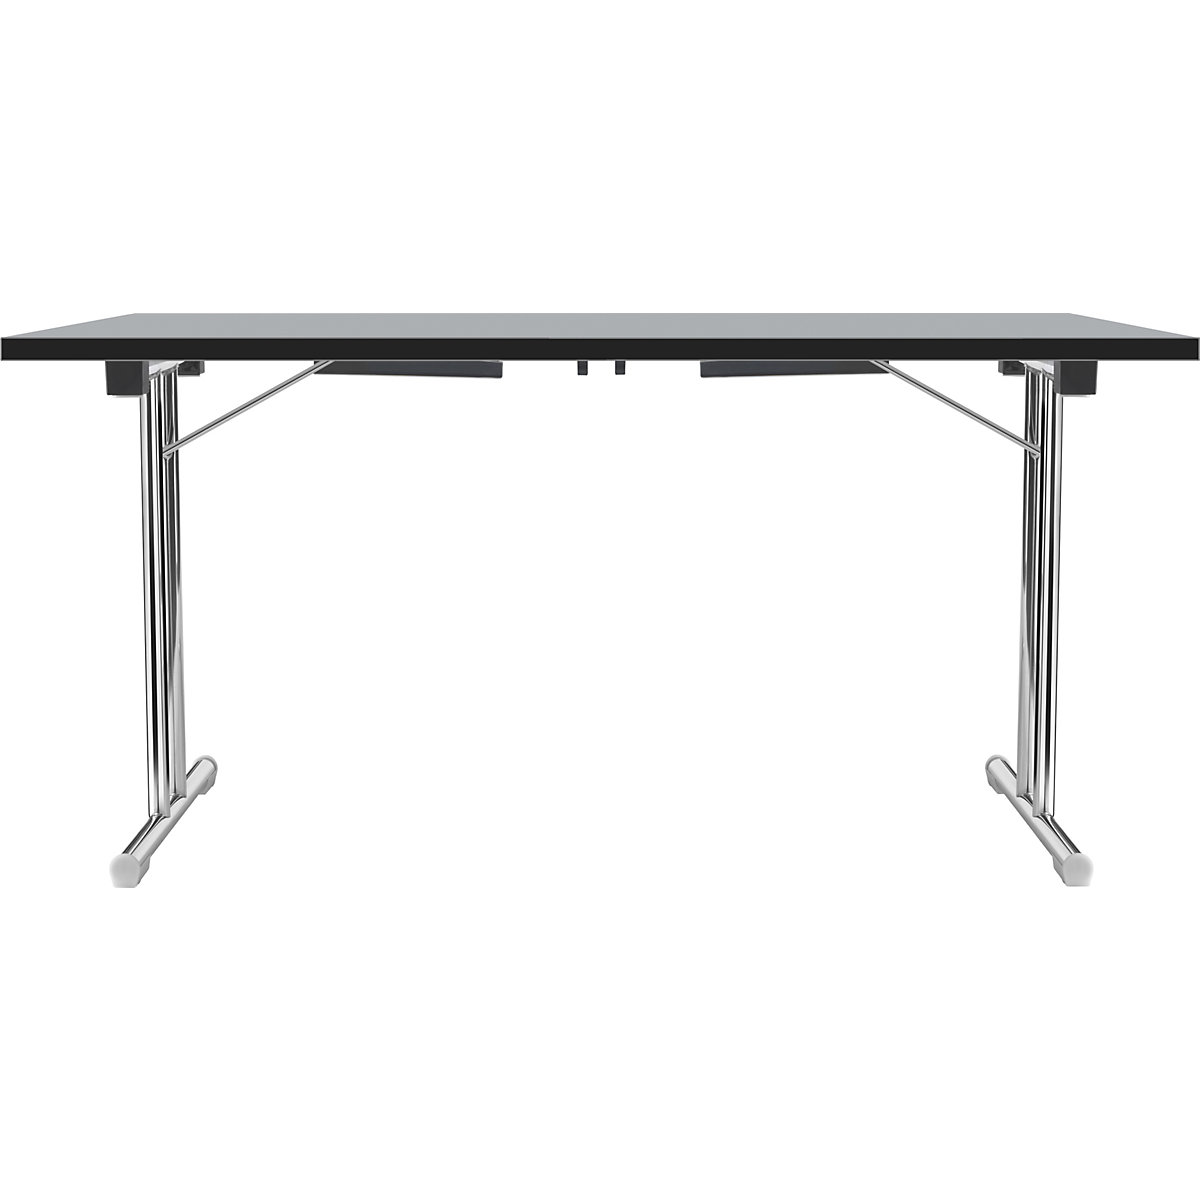 Folding table with double T base, tubular steel frame, chrome plated, light grey/black, WxD 1200 x 600 mm-5